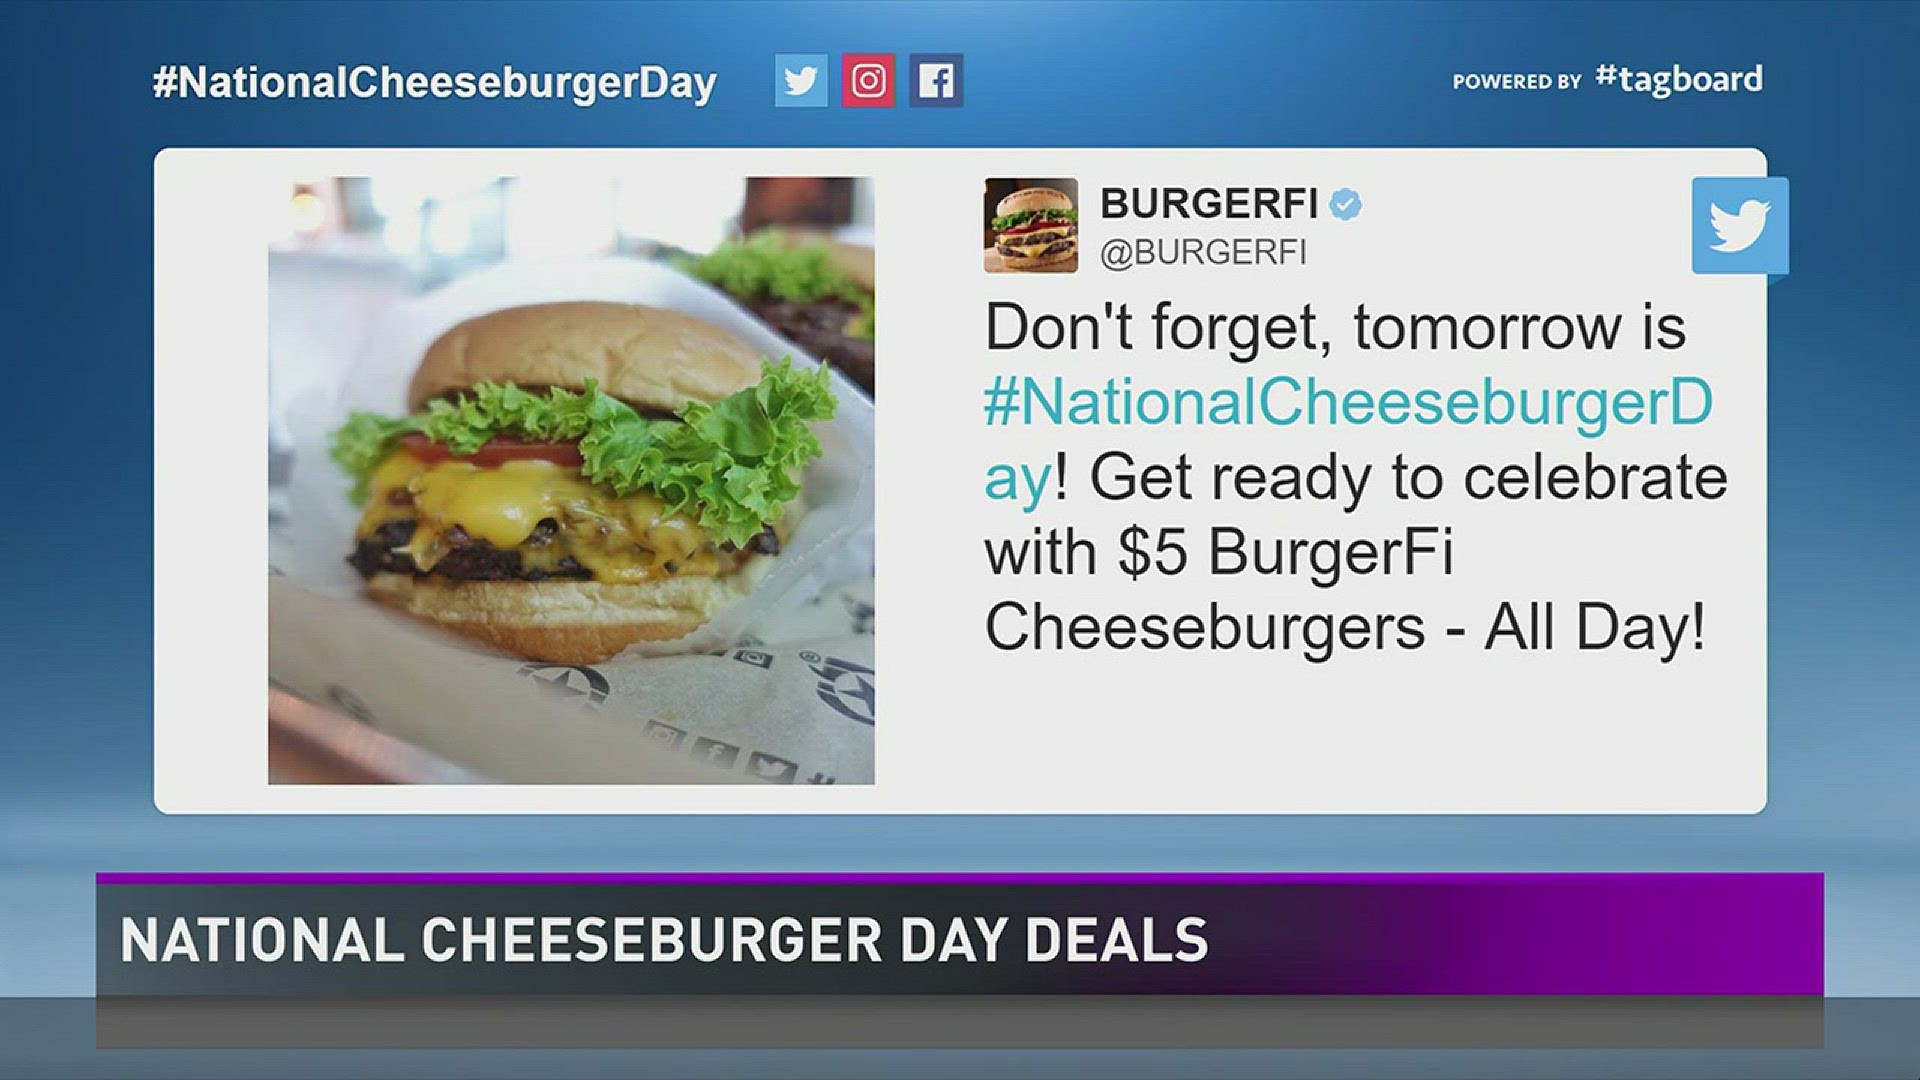 National Cheeseburger Day deals in San Antonio